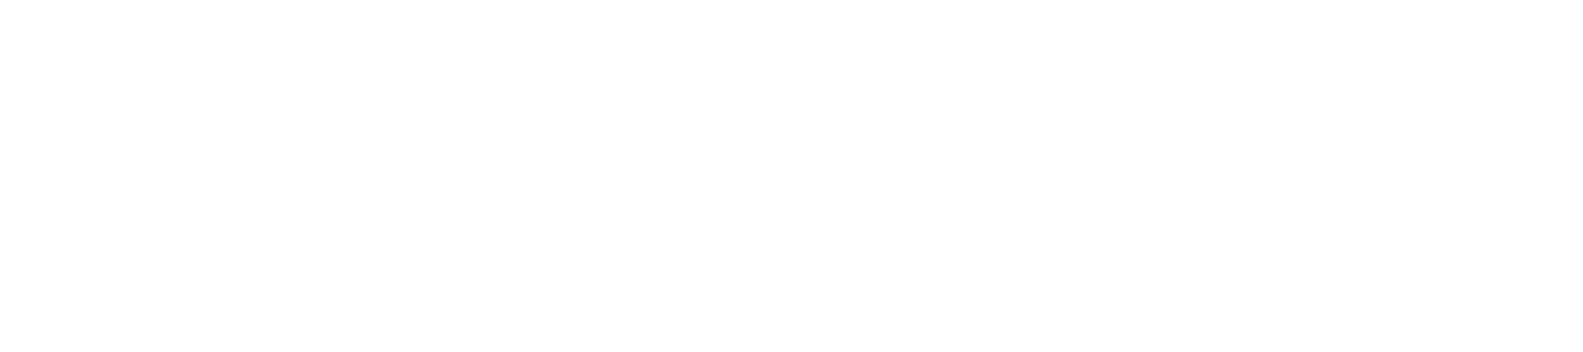 American Vanguard logo large for dark backgrounds (transparent PNG)